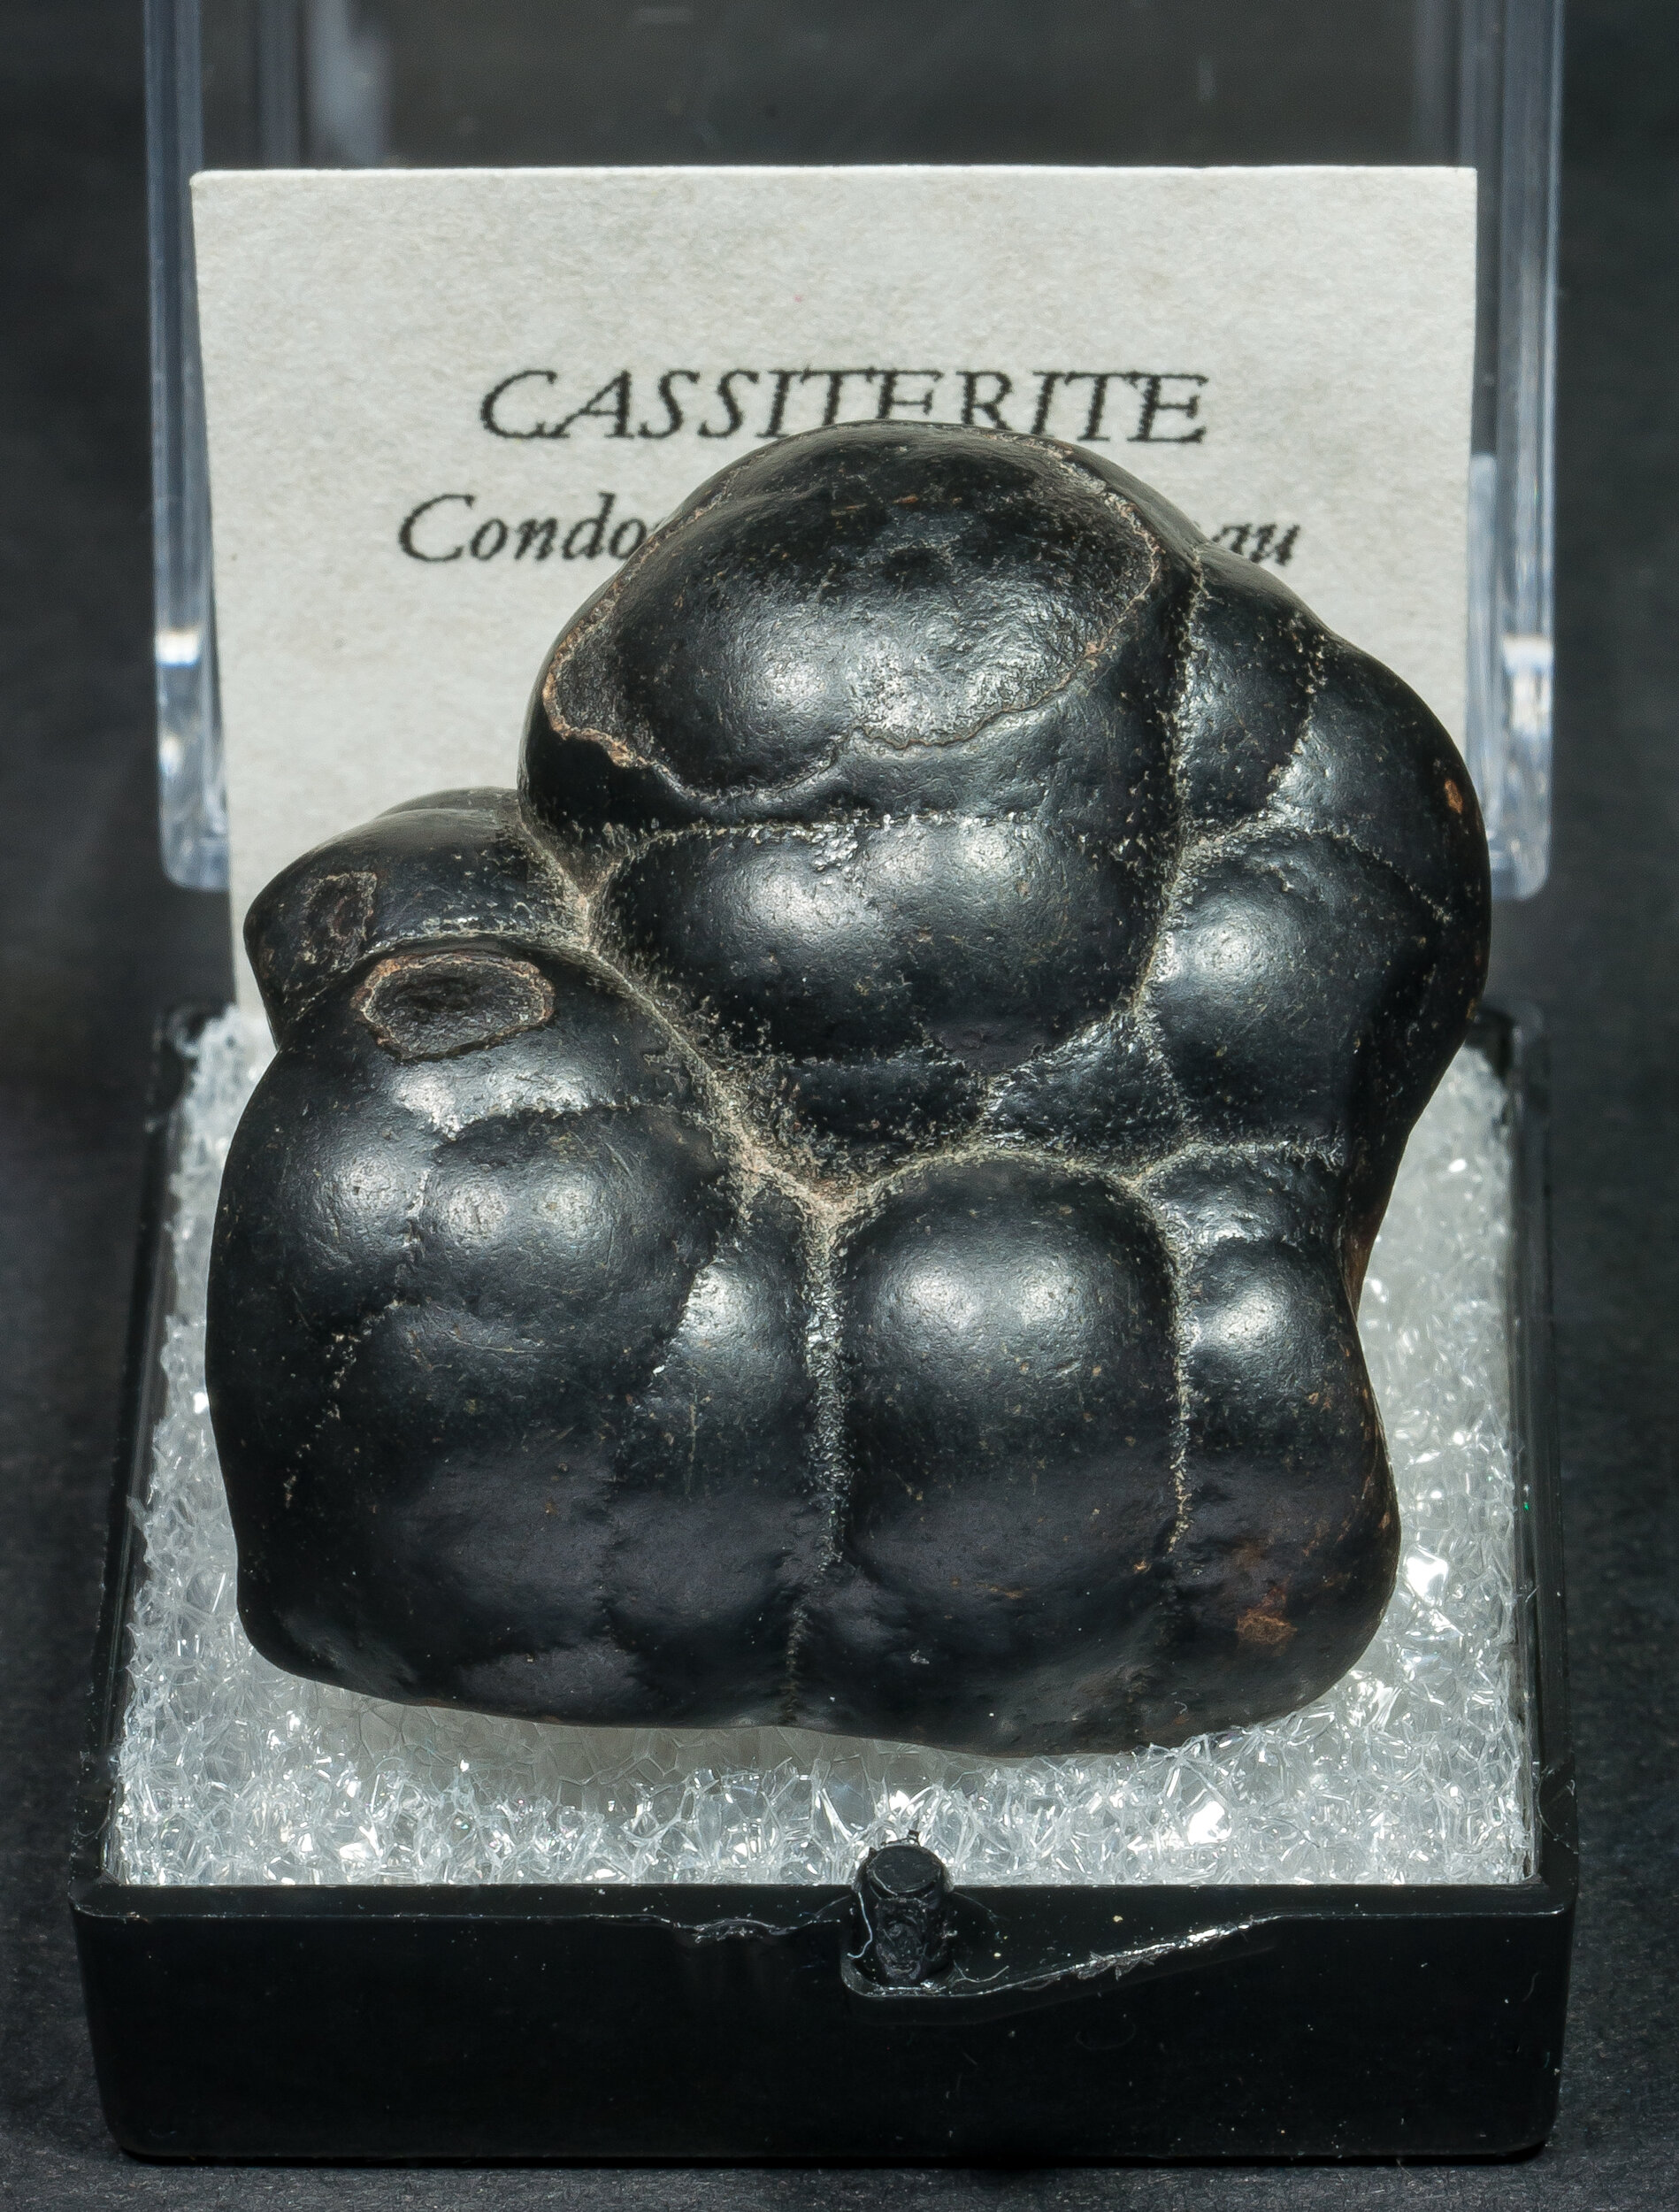 specimens/s_imagesAO2/Cassiterite-TYR64AO2f.jpg